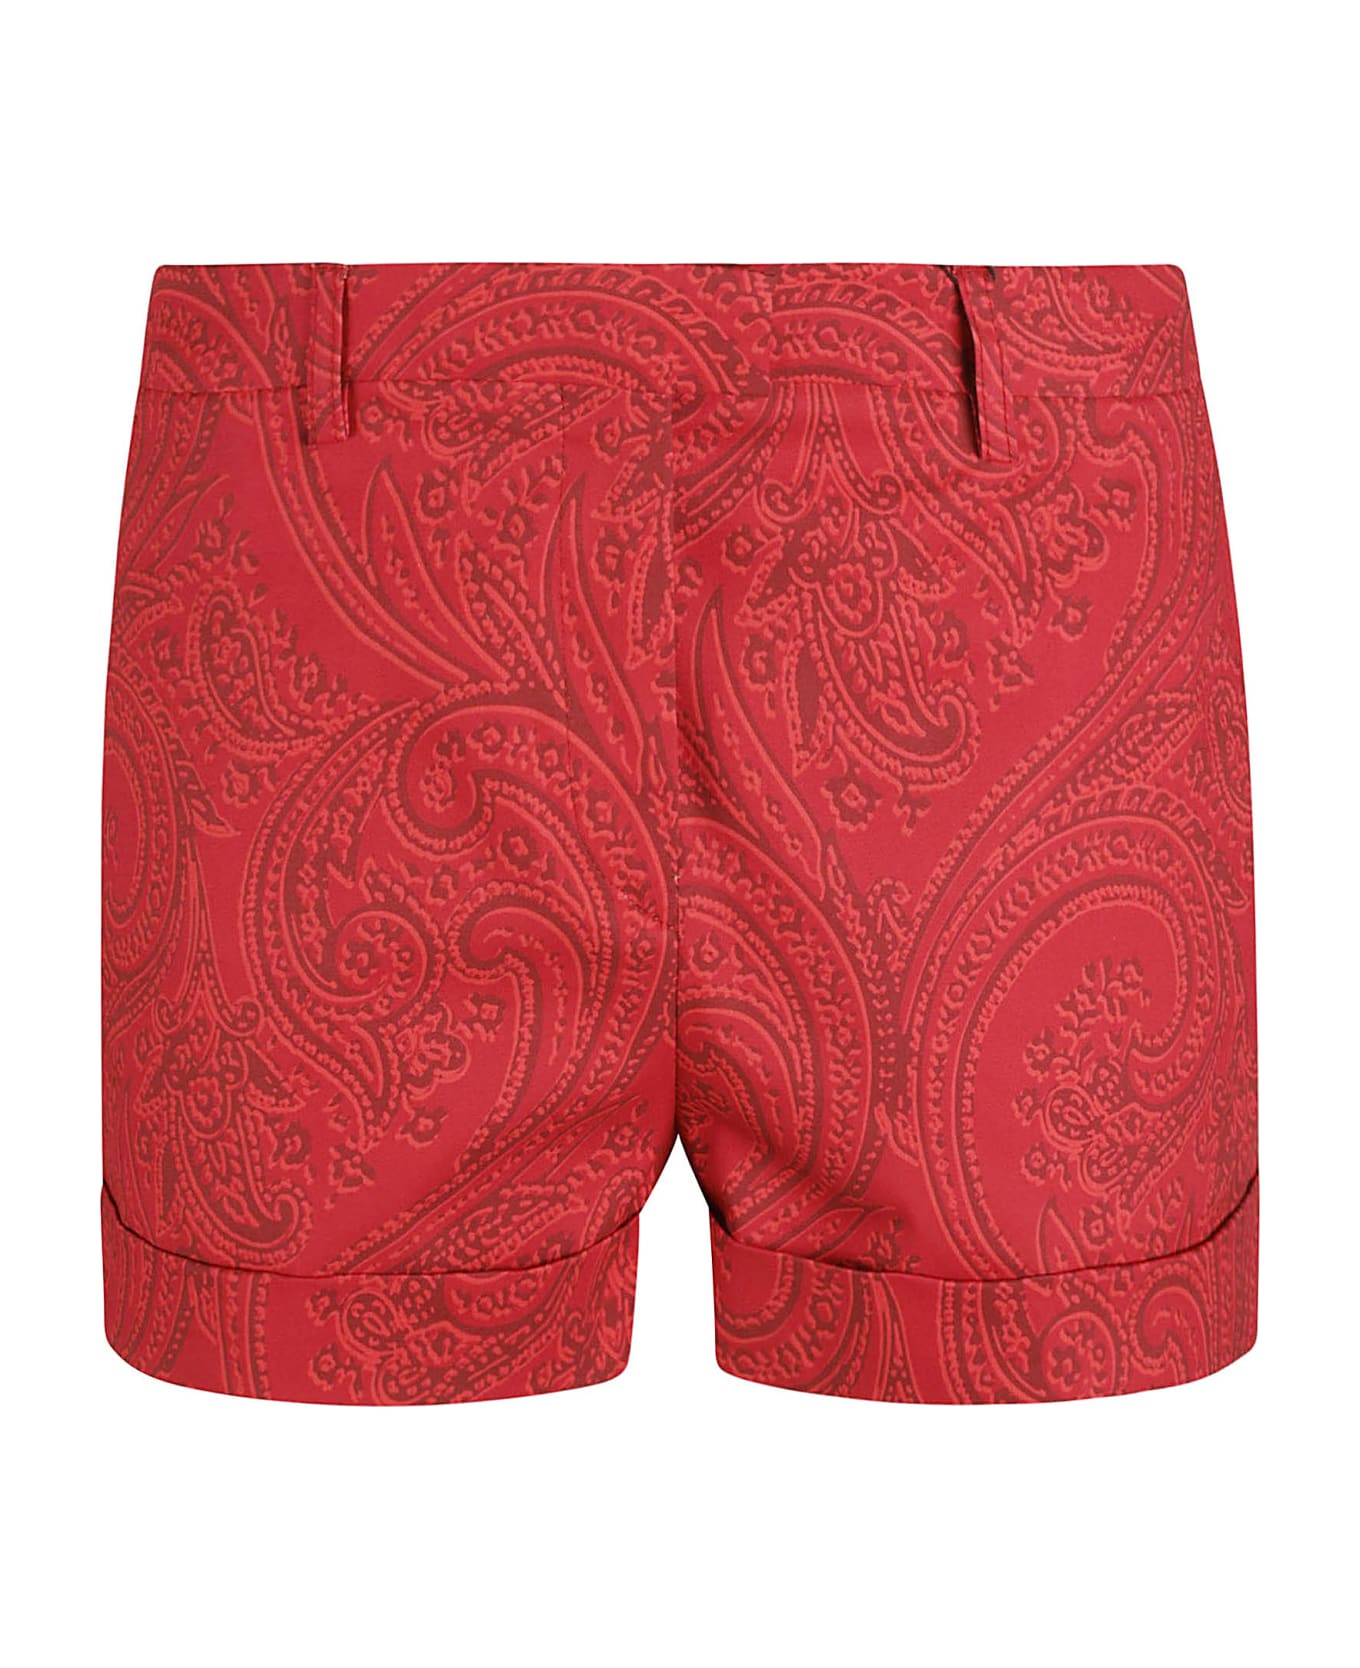 Etro Paisley Print Shorts - Red